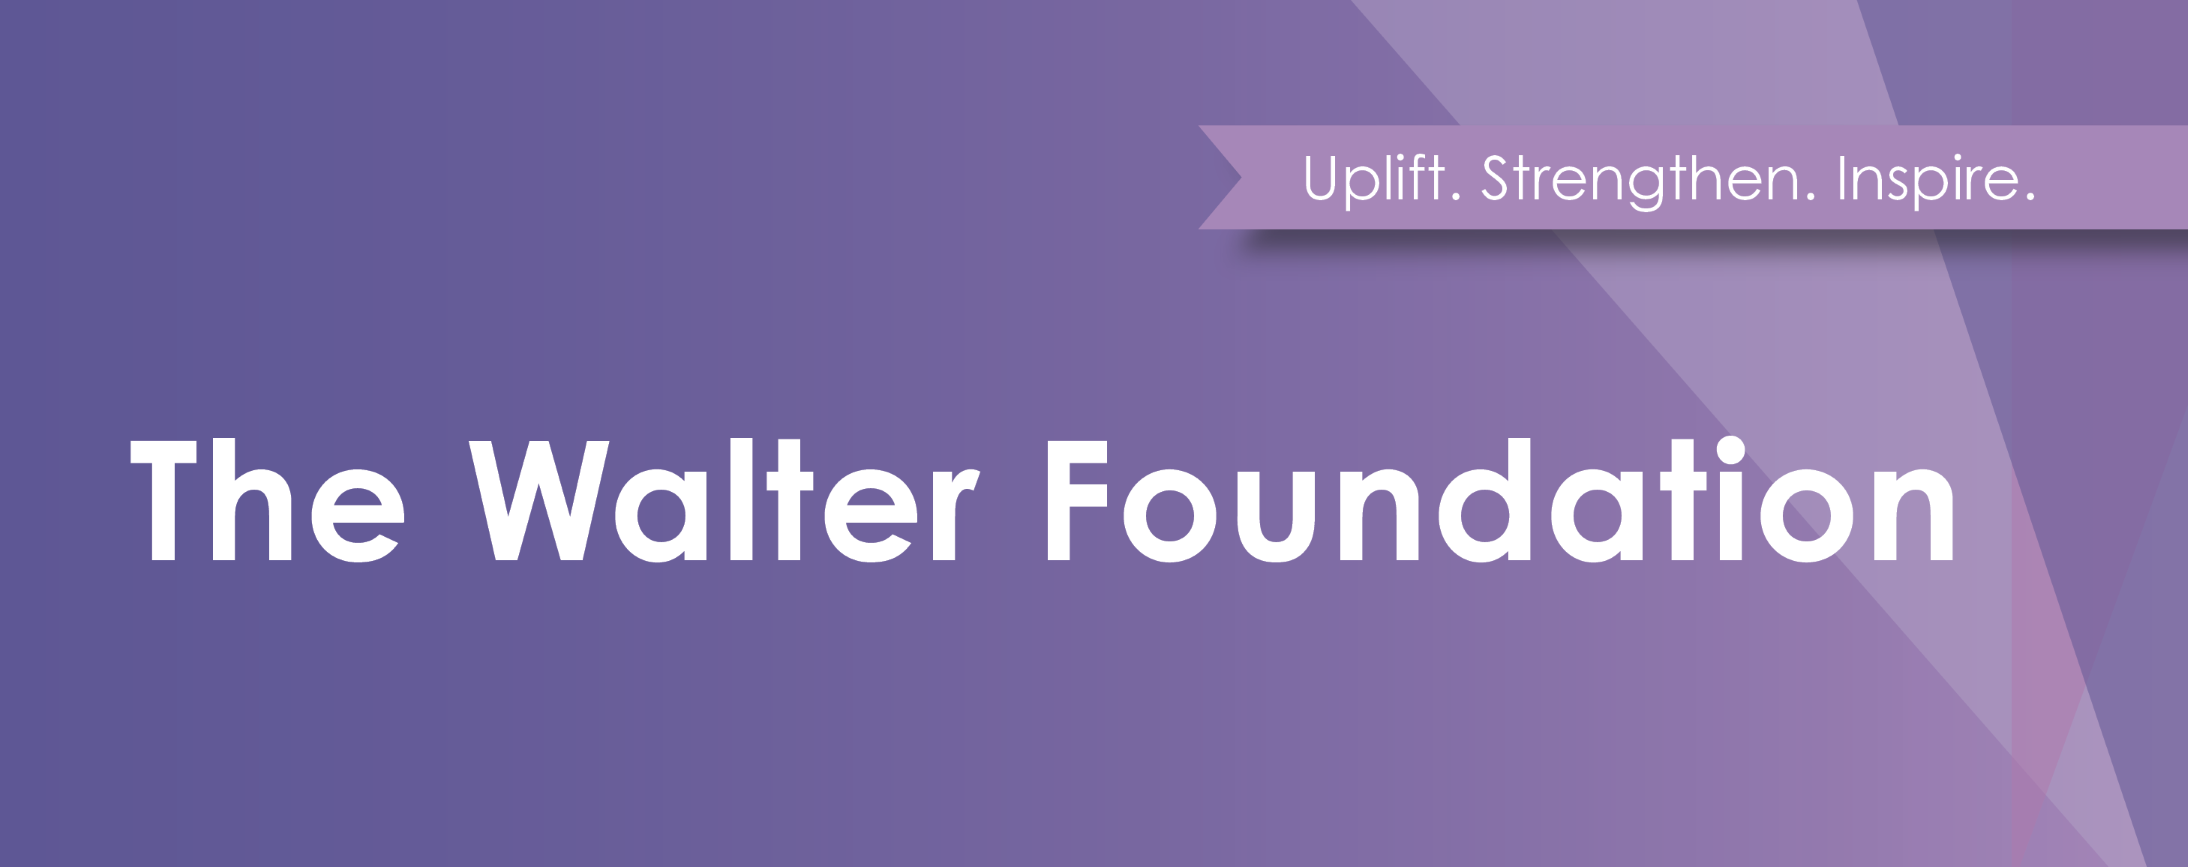 The Walter Foundation logo